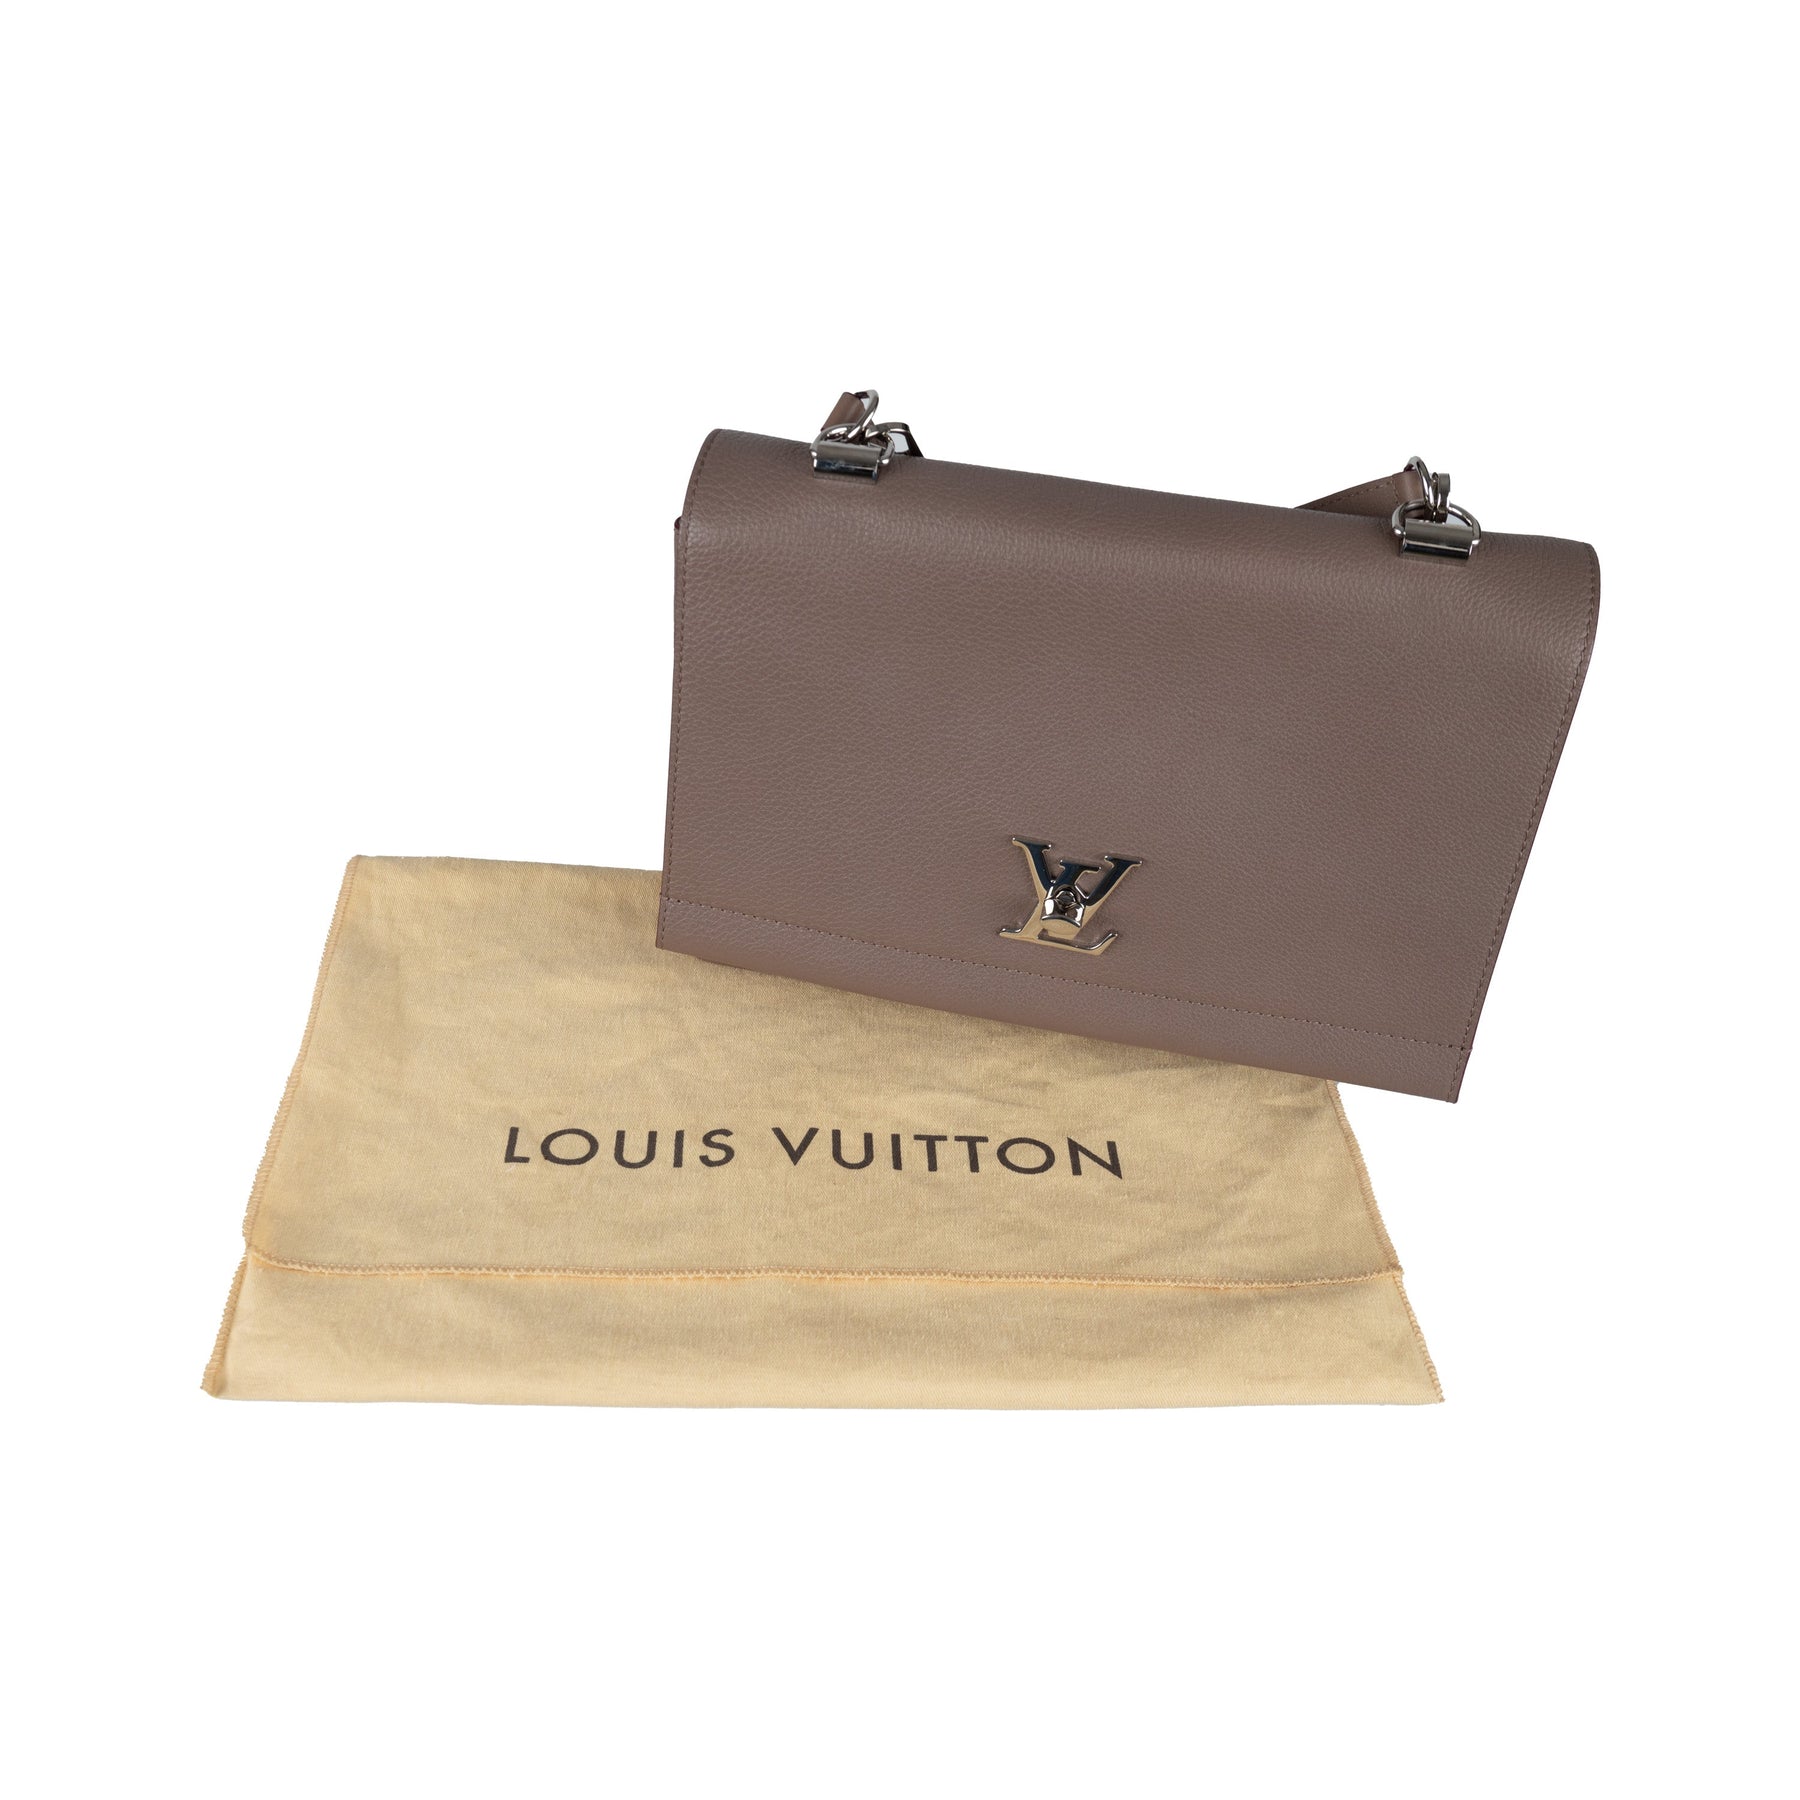 Louis Vuitton cambia indirizzo a Bari